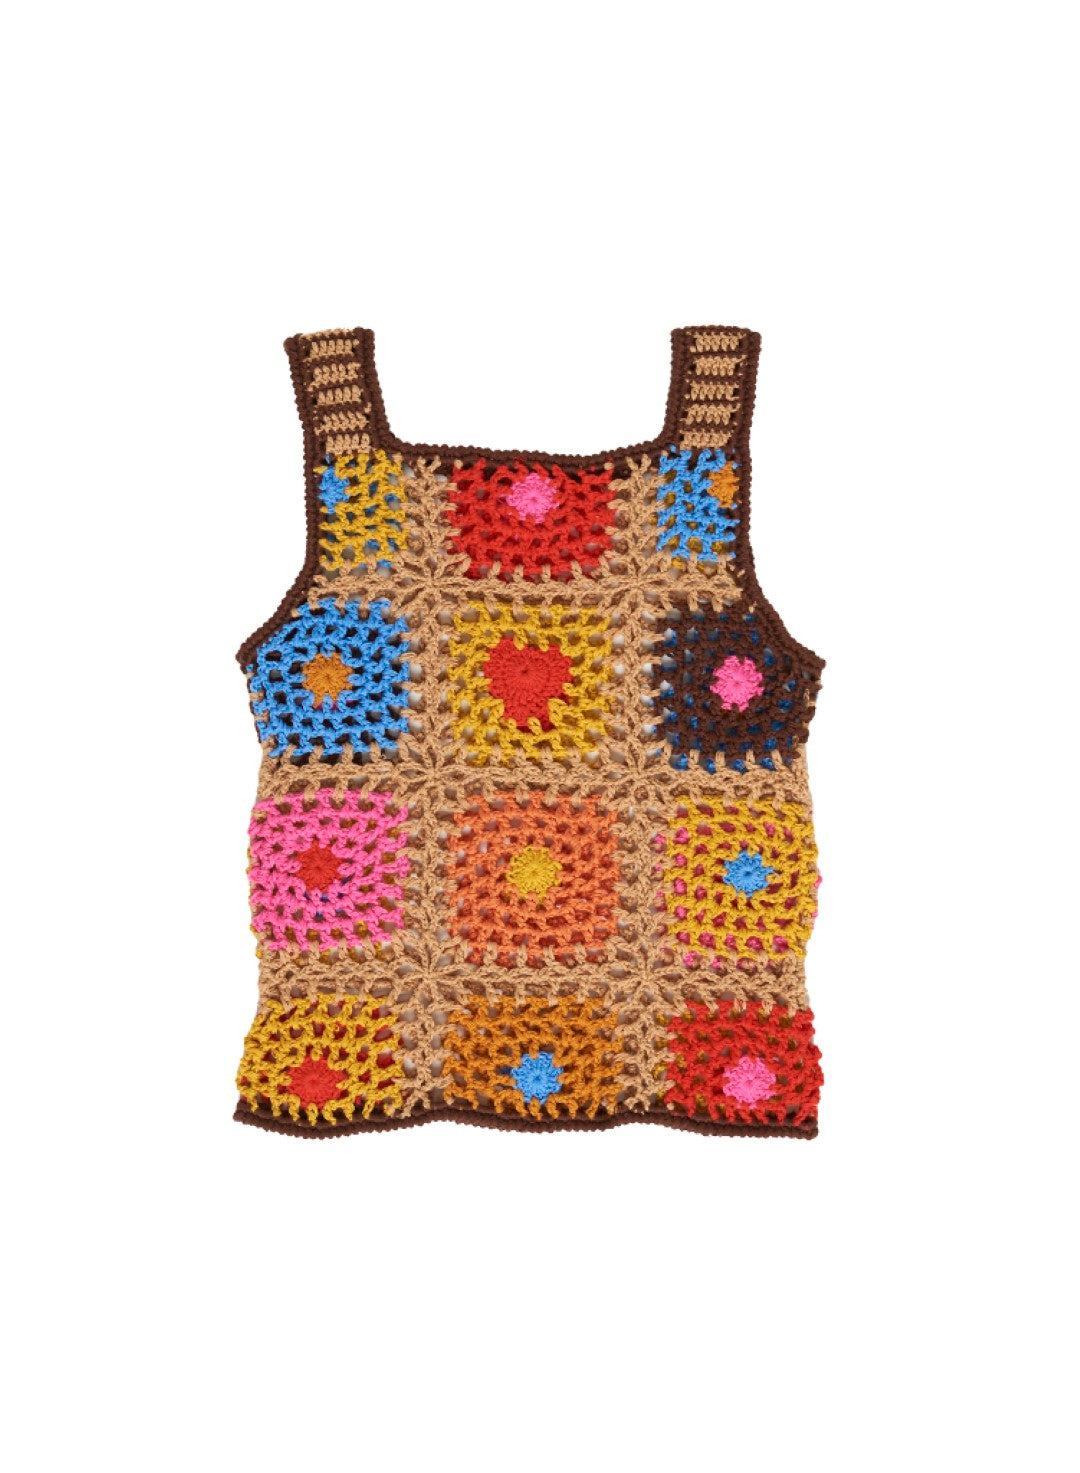 Knit Top Lizzy Multi-Color van Ammehoela